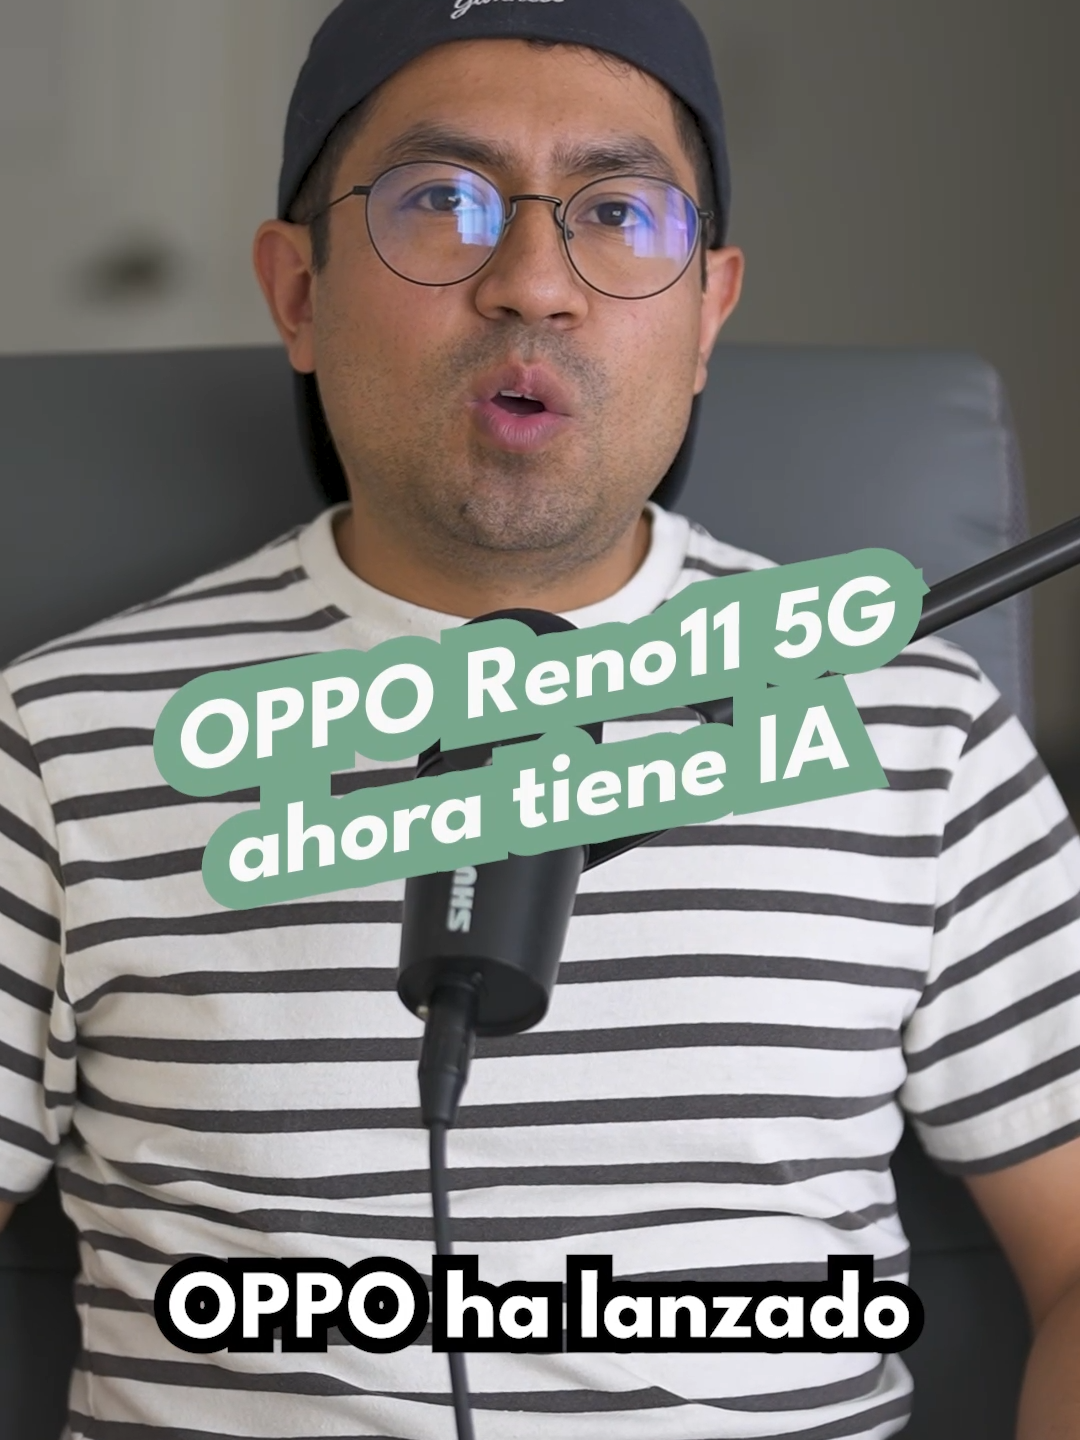 OPPO Reno11 5G ahora tiene IA #celulares #smartphones #smartwatch#android #tecnologia#isamarcial#review#unboxing #oppo #opporeno #opporeno115g #IA